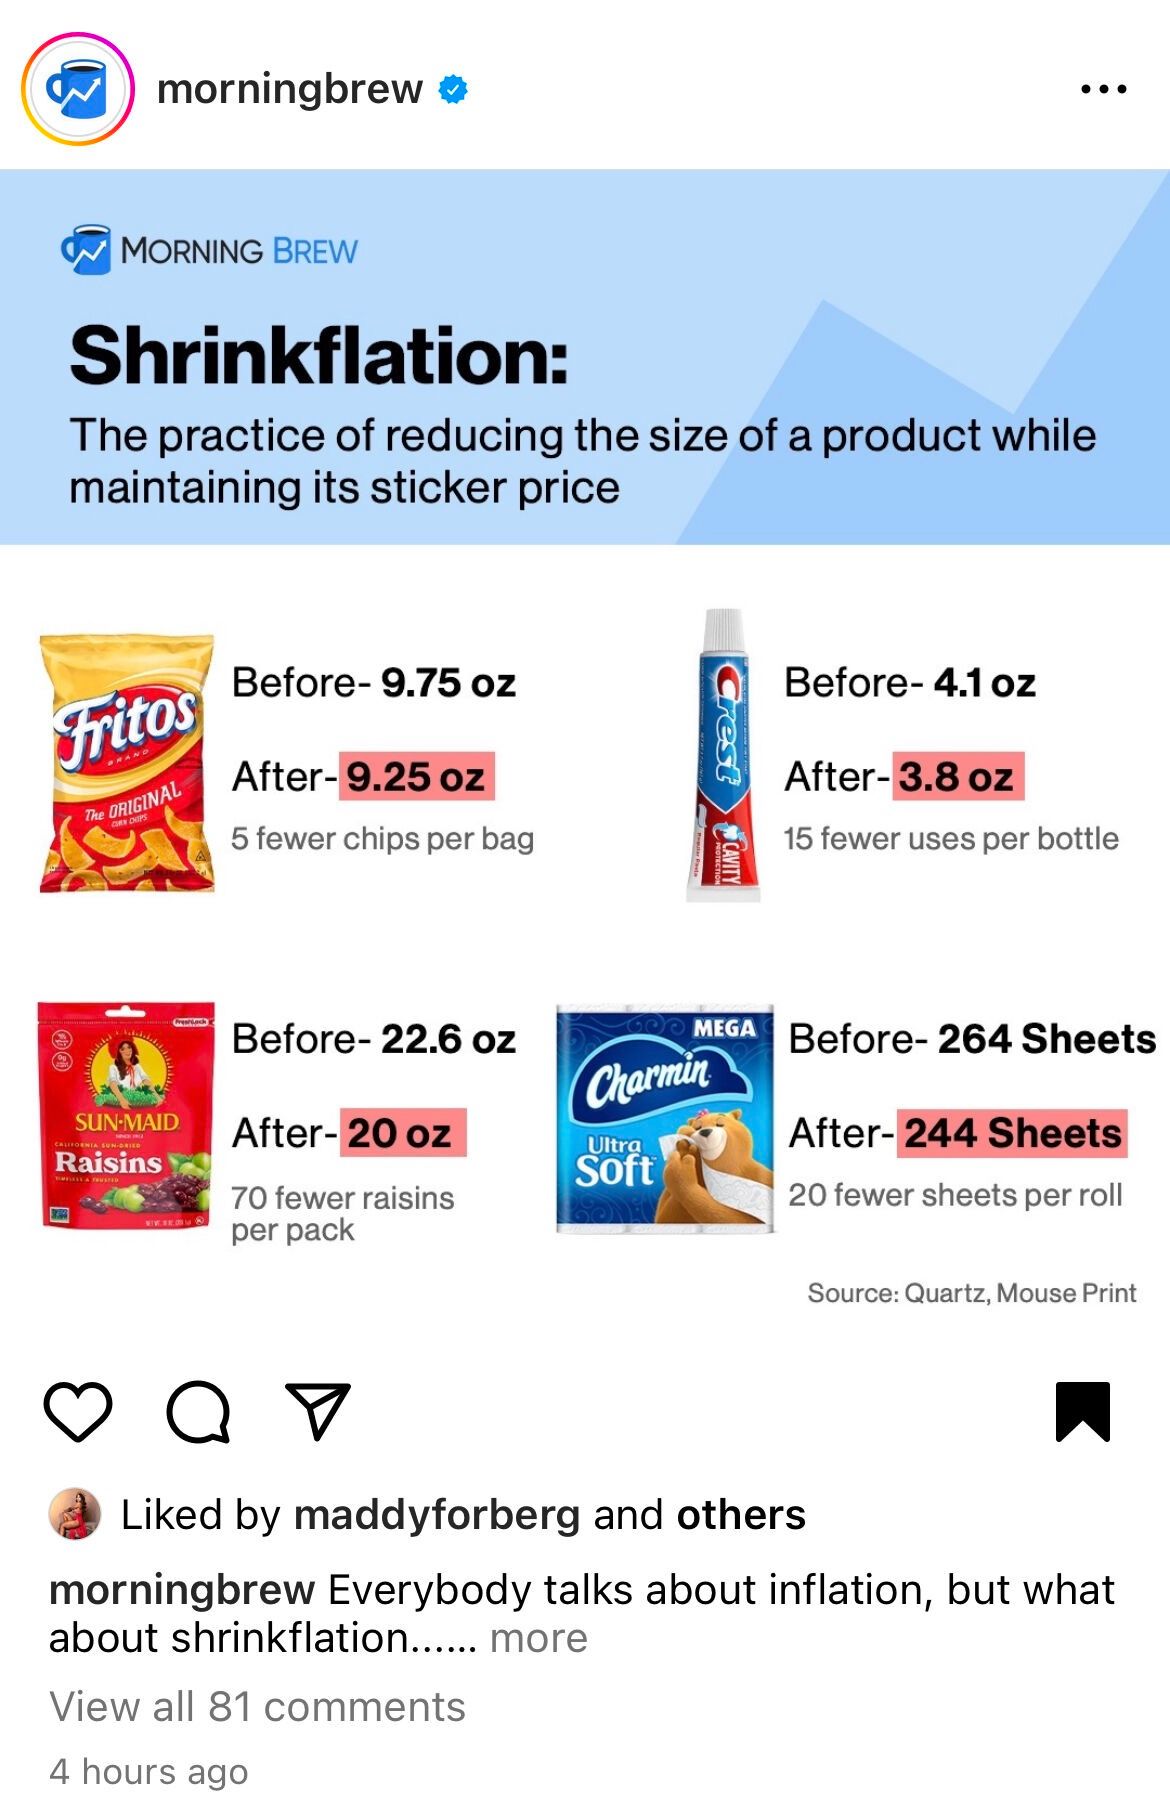 Shrinkflation